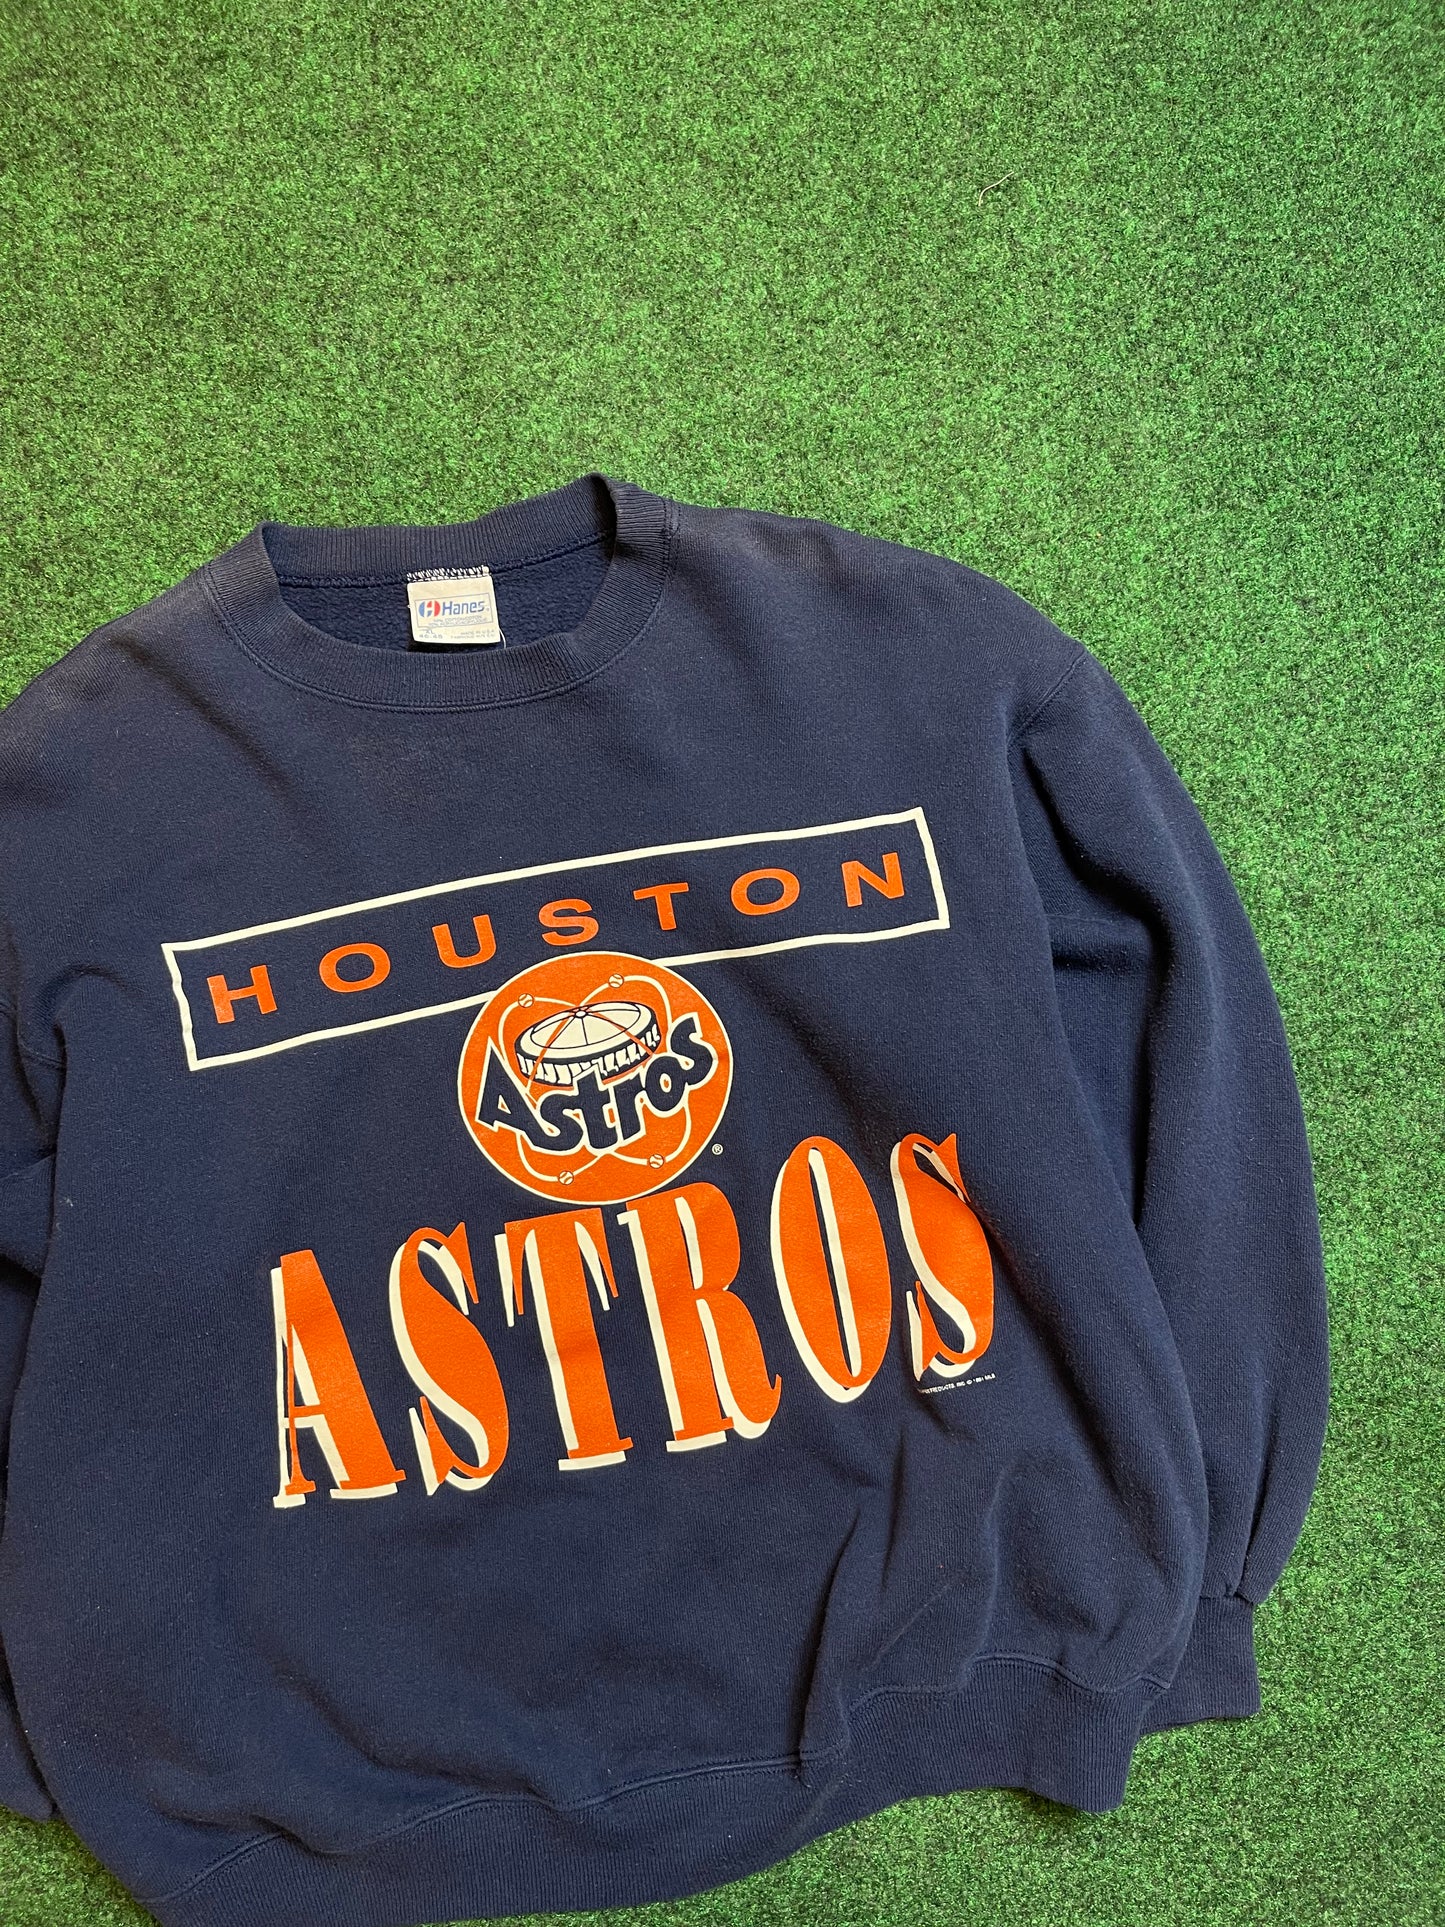 90’s Houston Astros Vintage MLB Crewneck (Large)